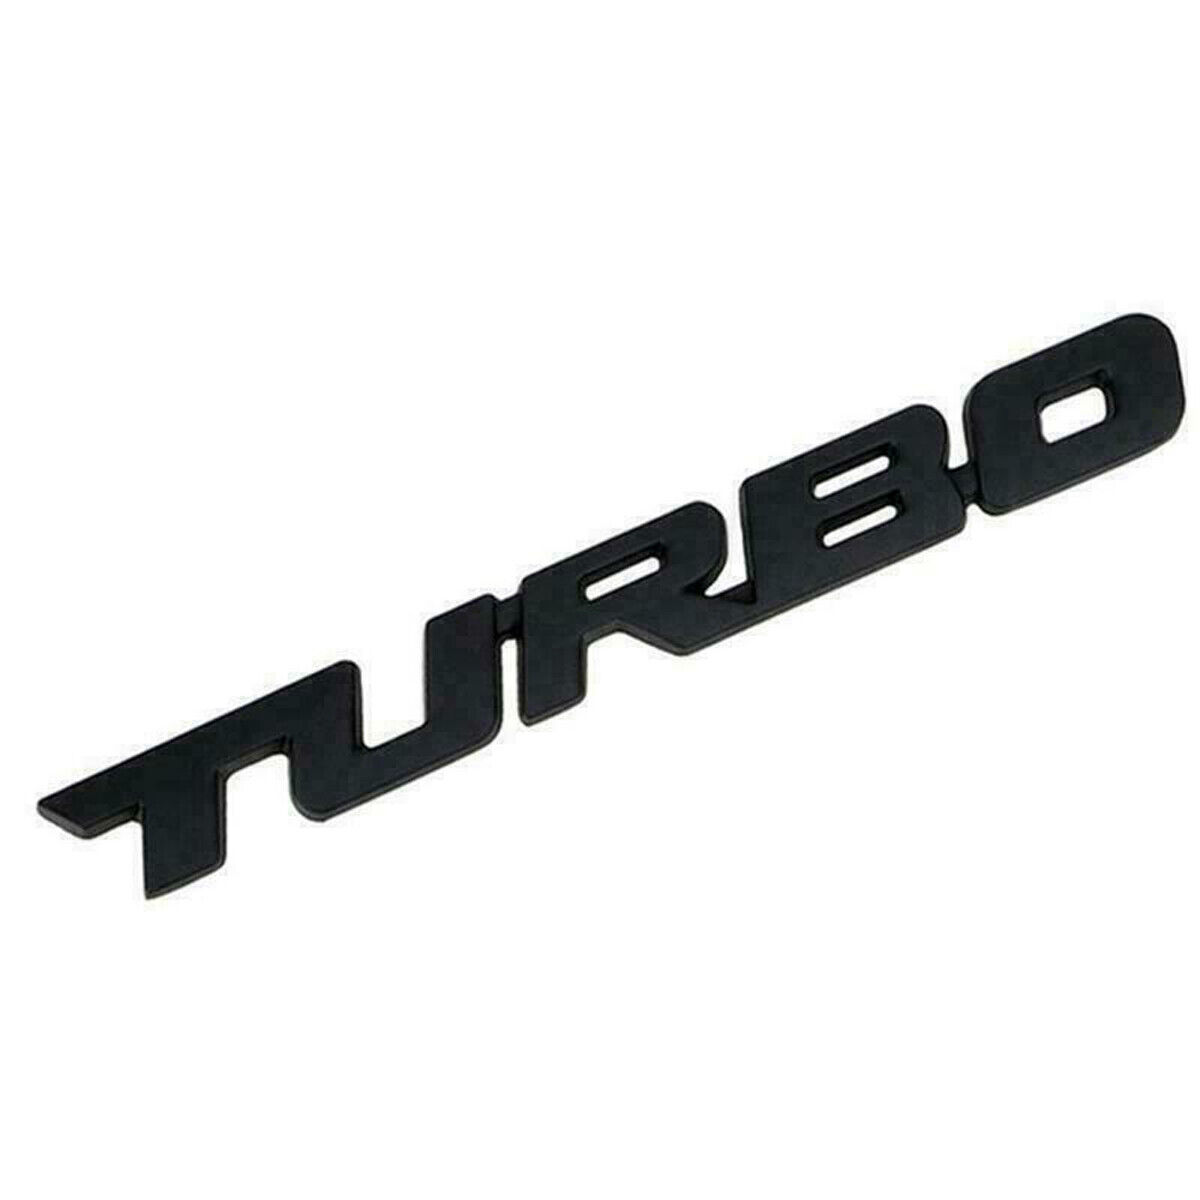 3D TURBO Metal Chrome Logo Sport Car Badge Emblem Decal Sticker Car Accessories.